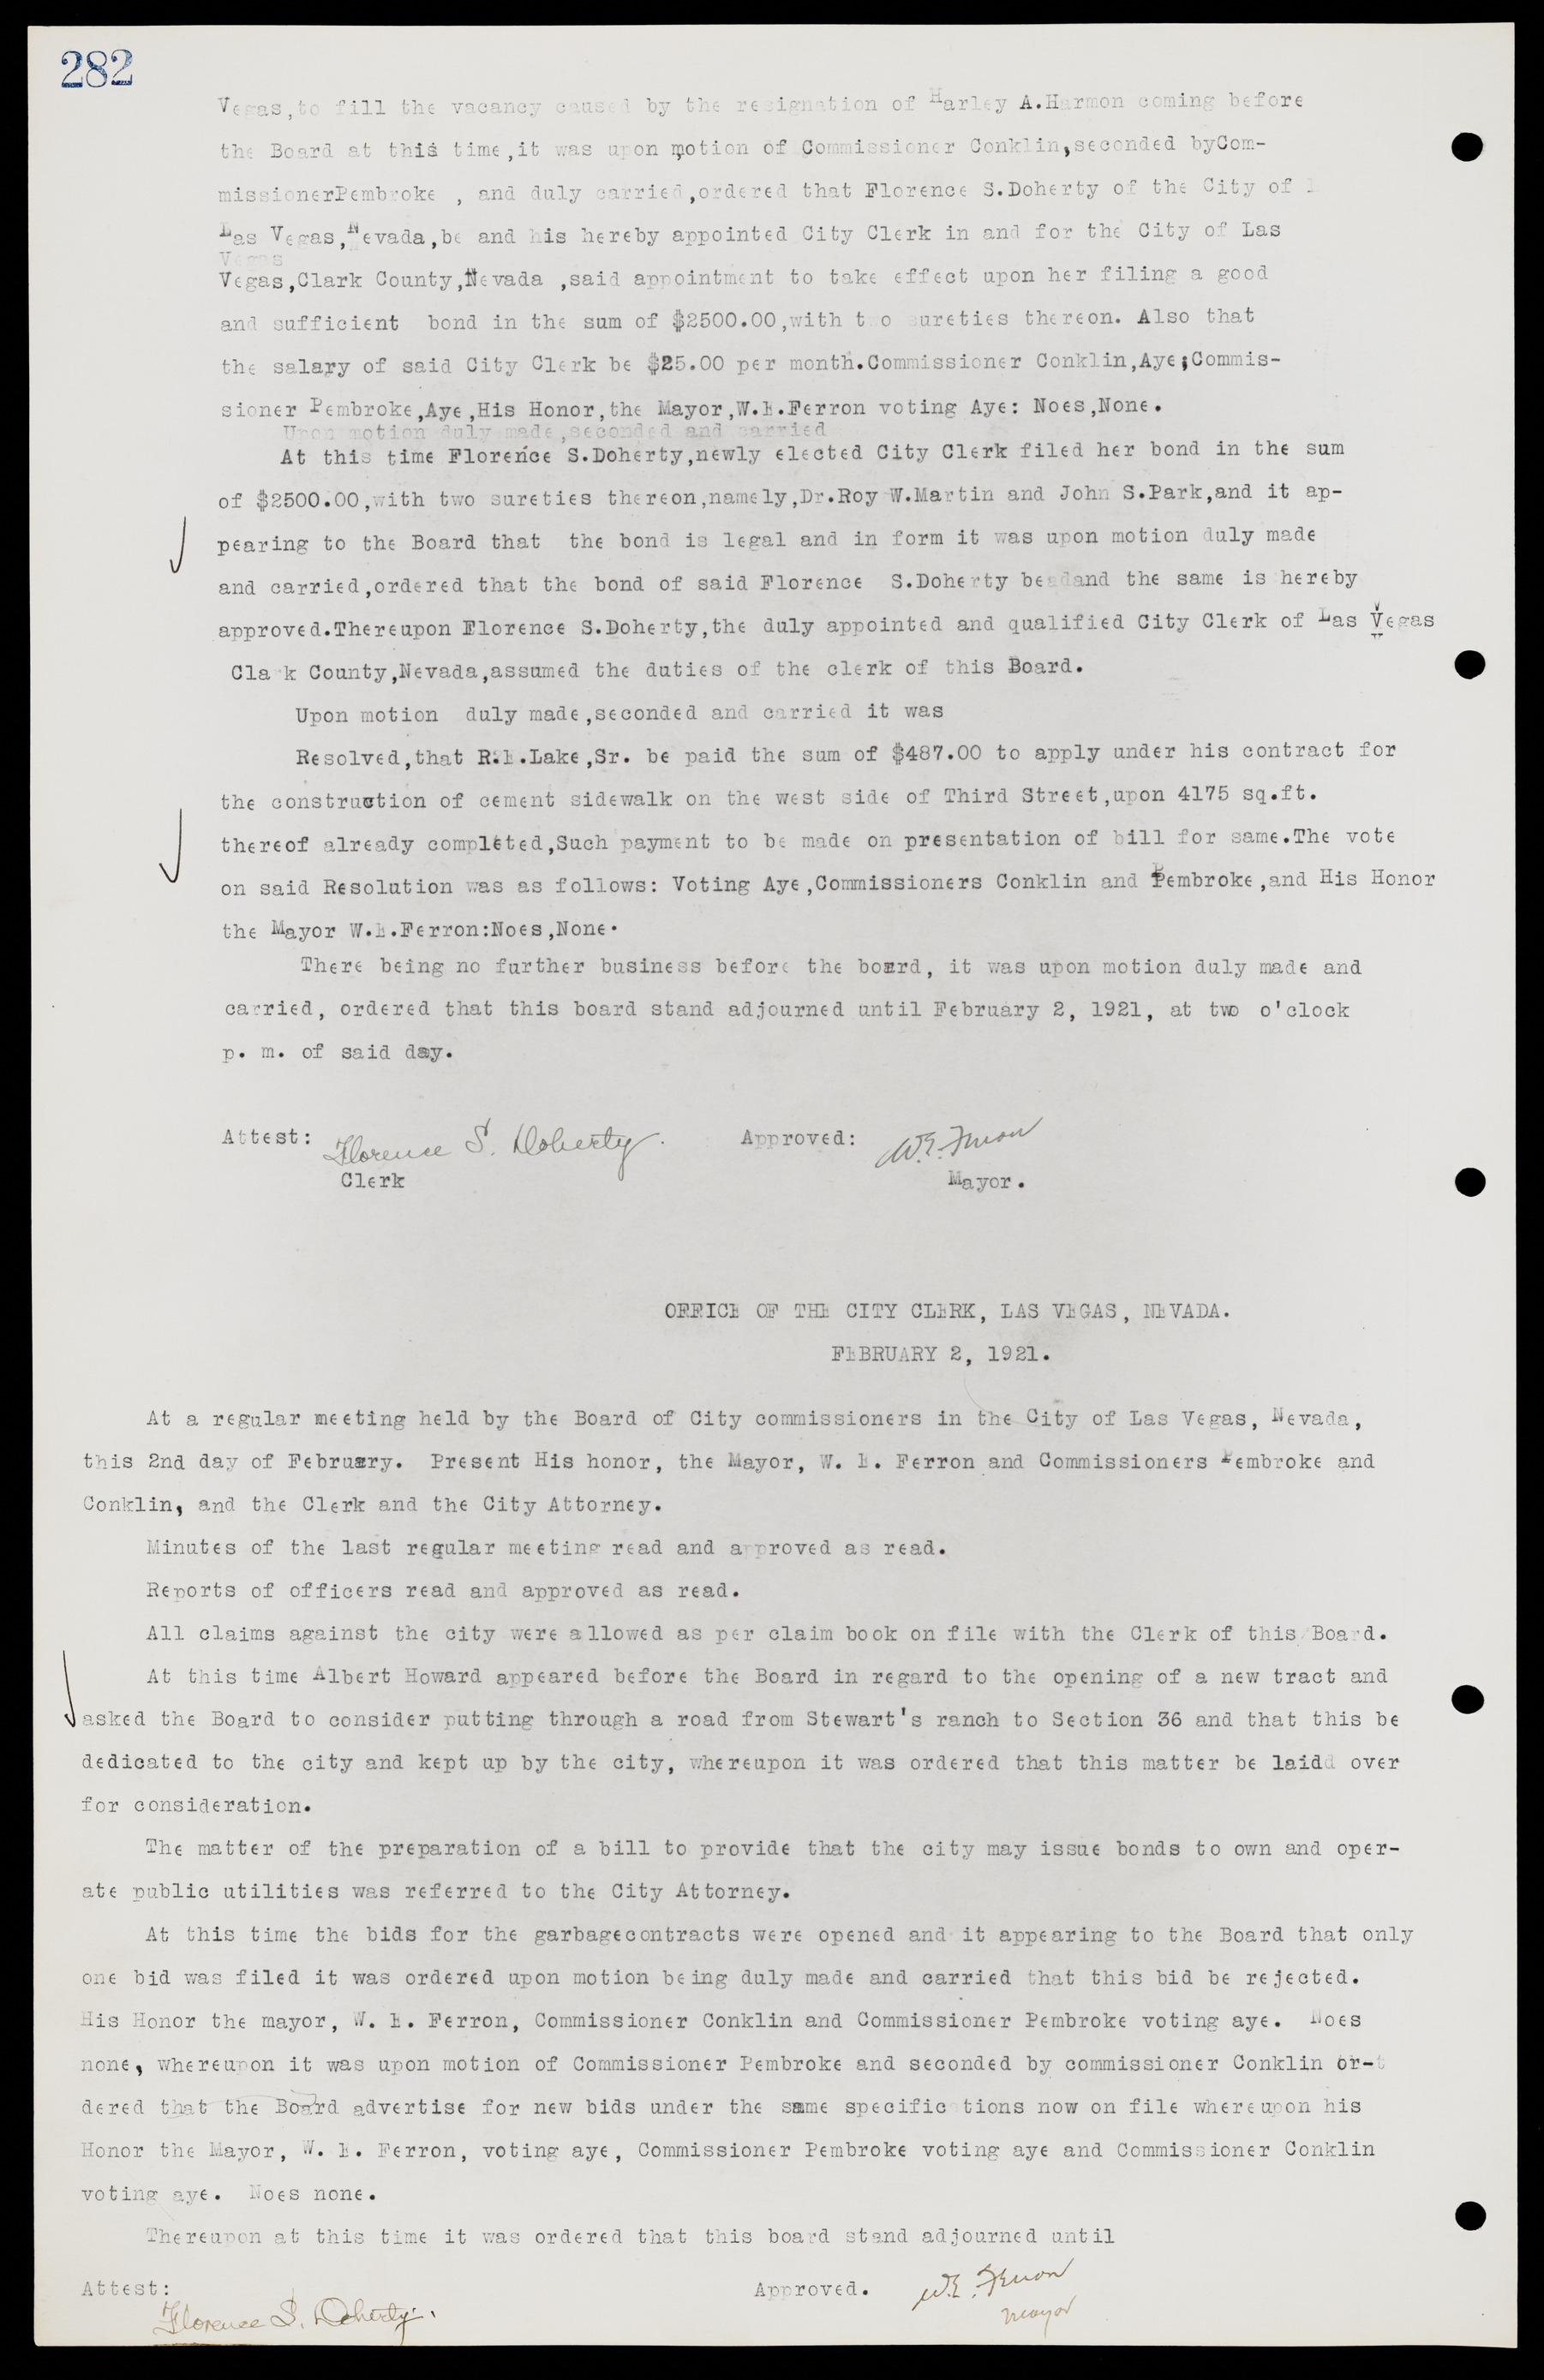 Las Vegas City Commission Minutes, June 22, 1911 to February 7, 1922, lvc000001-298